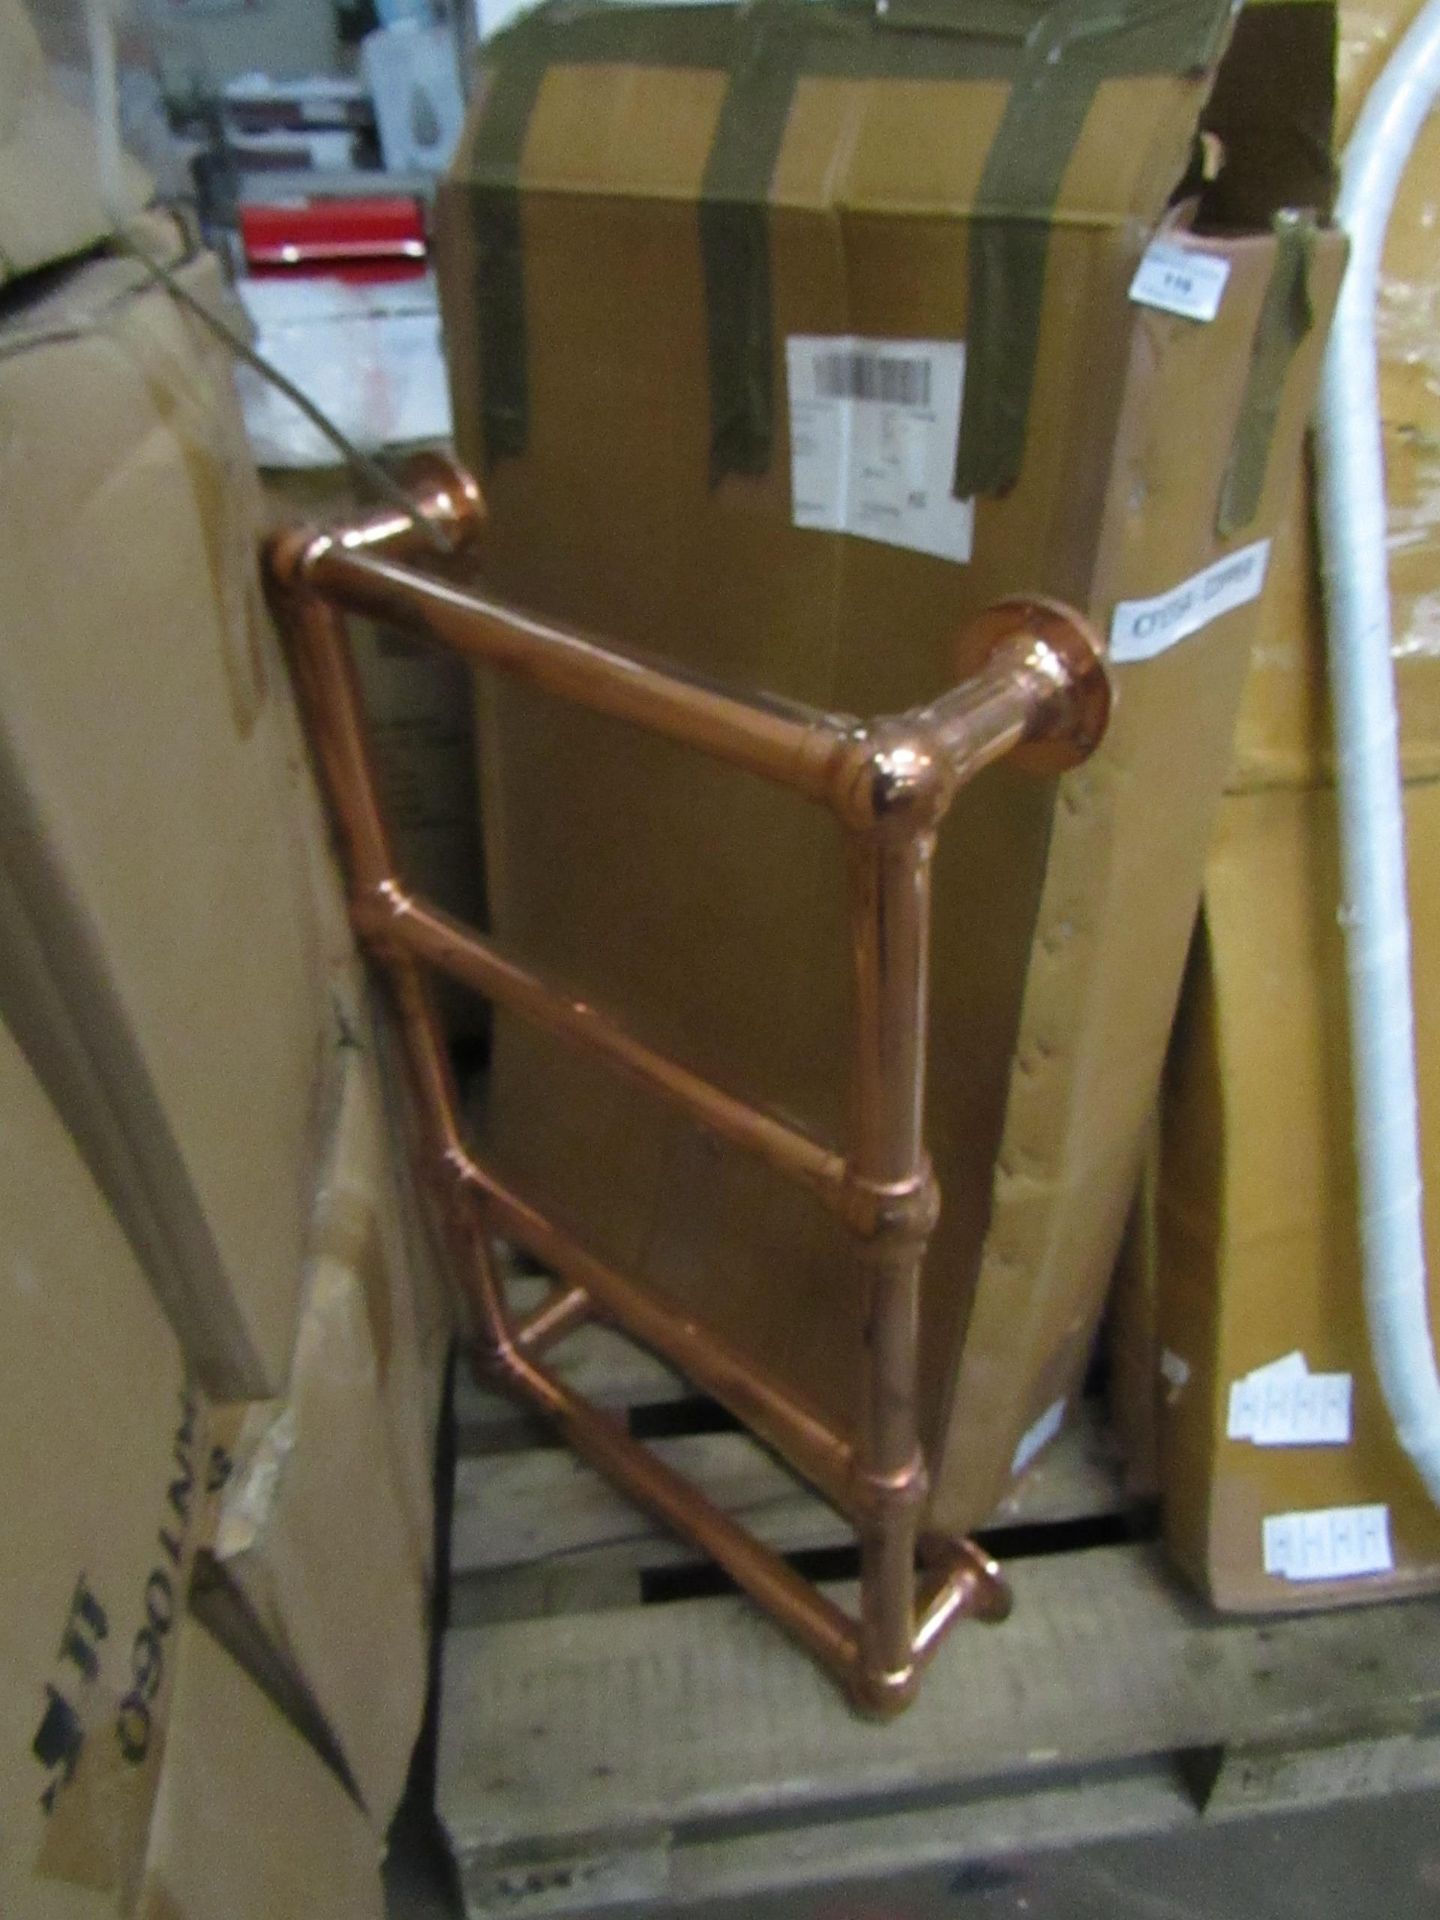 Copper design towel radiator, unchecked.